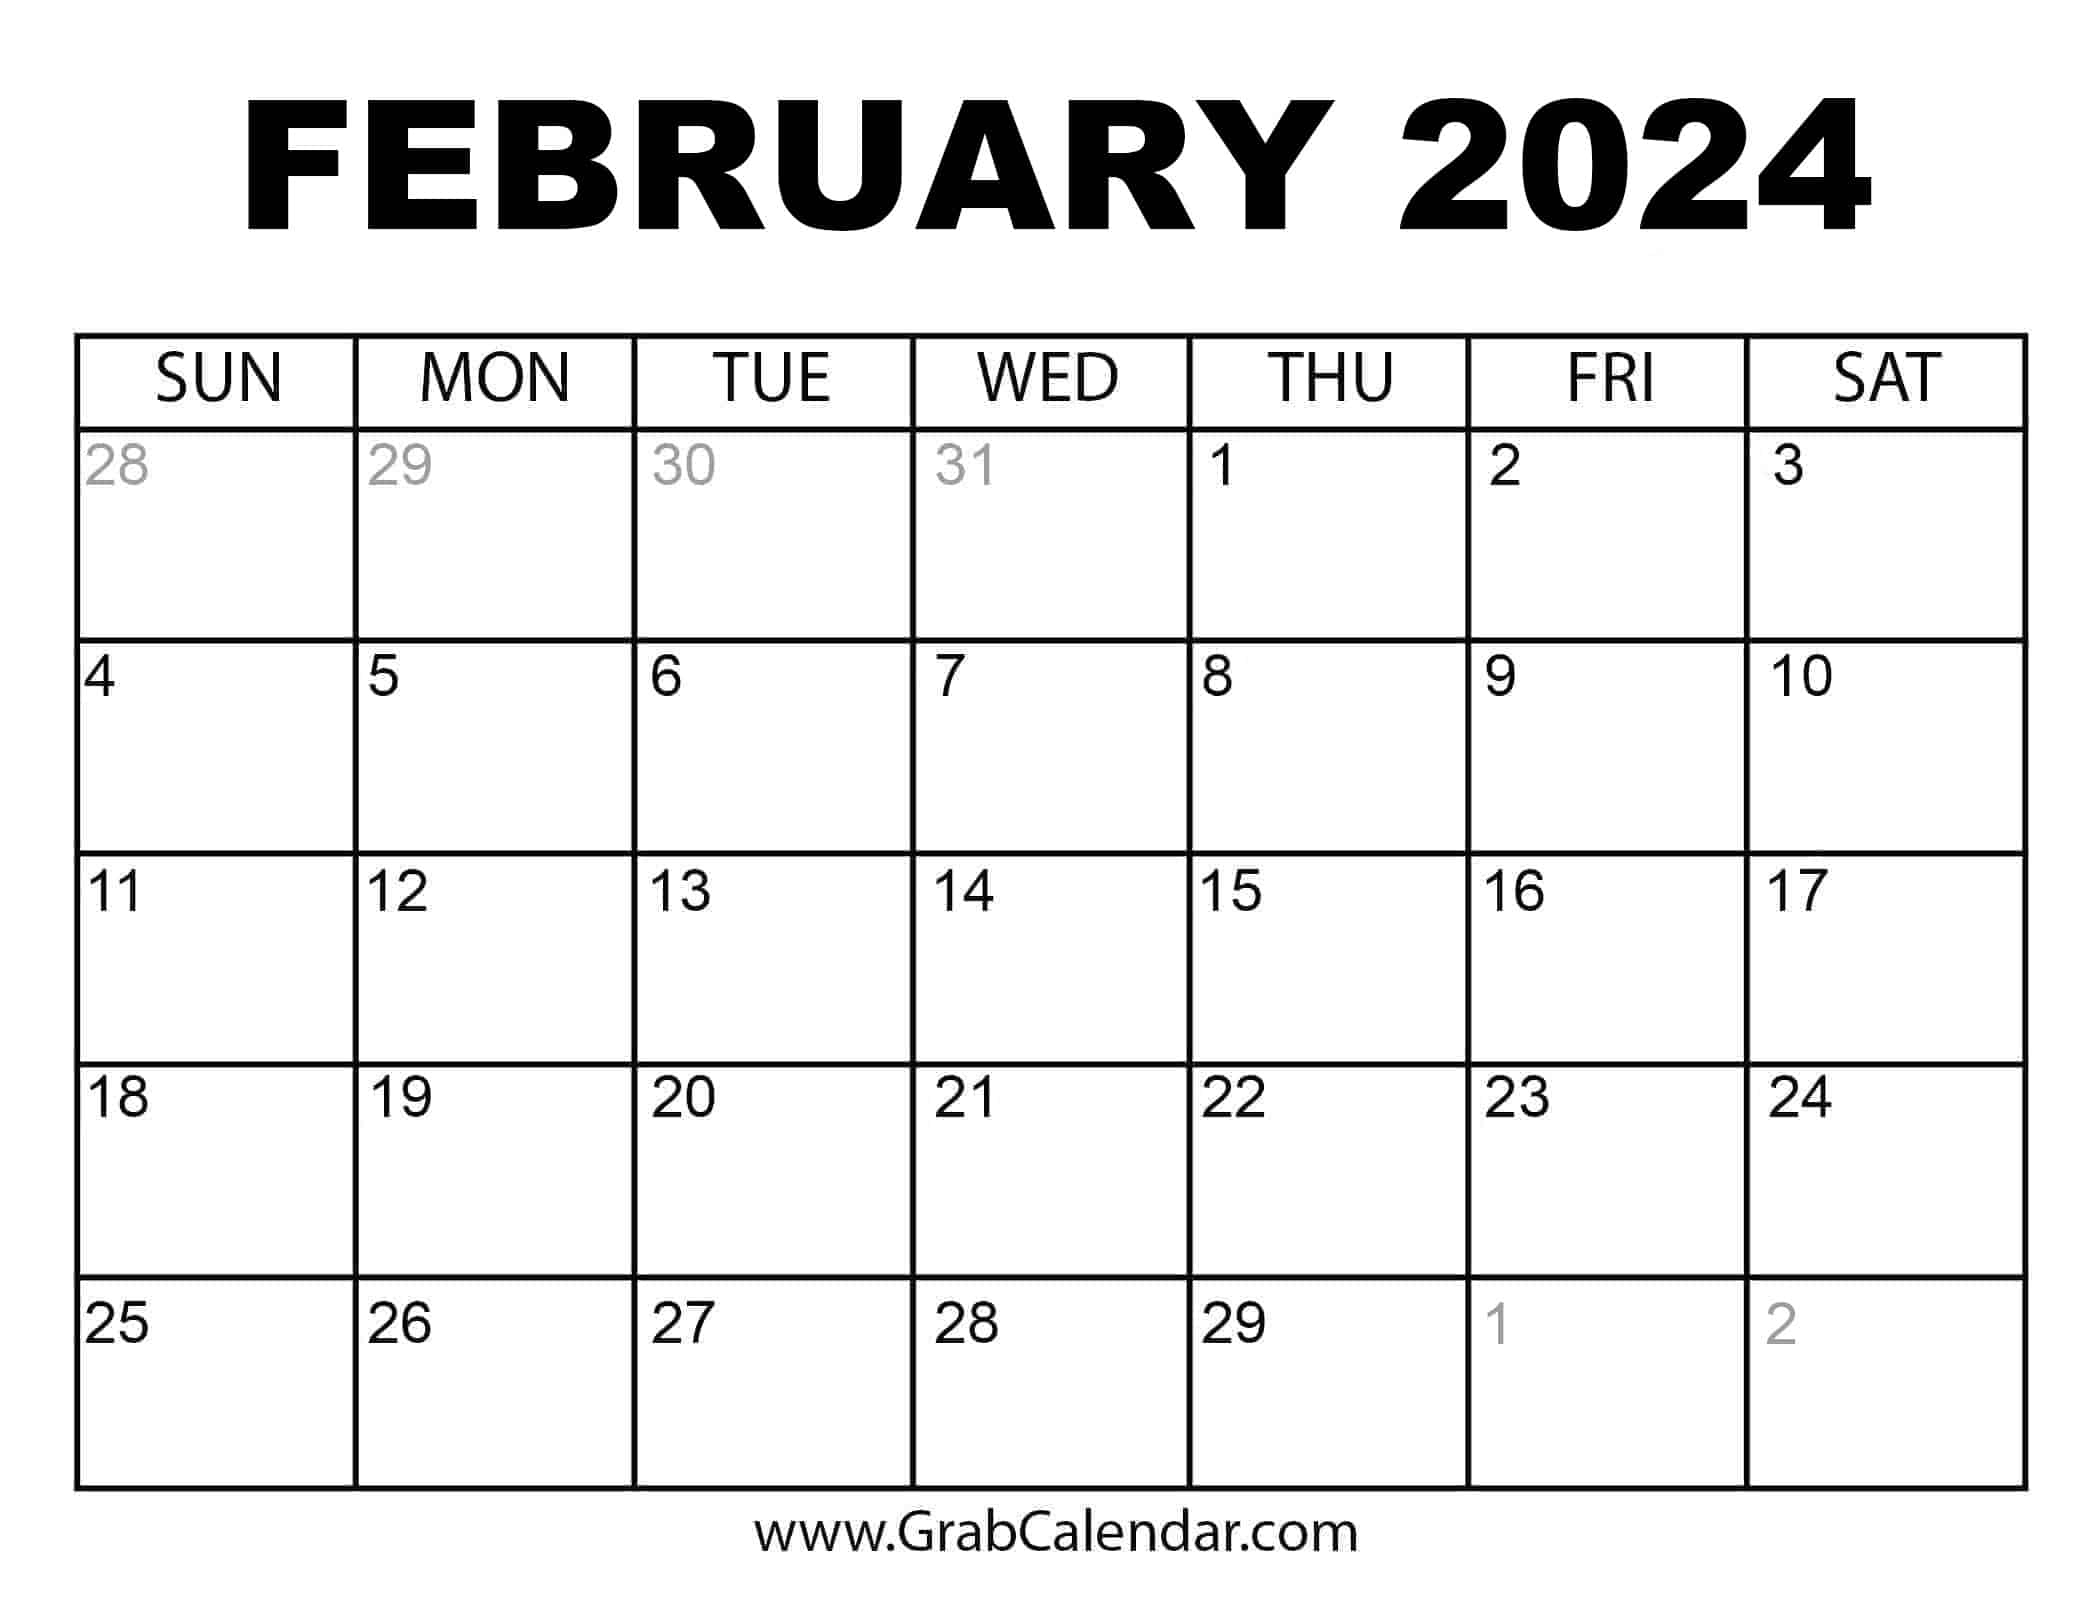 February 2024 Calendar To Print Lani Shanta - Free Printable 2024 Calender With Pigs